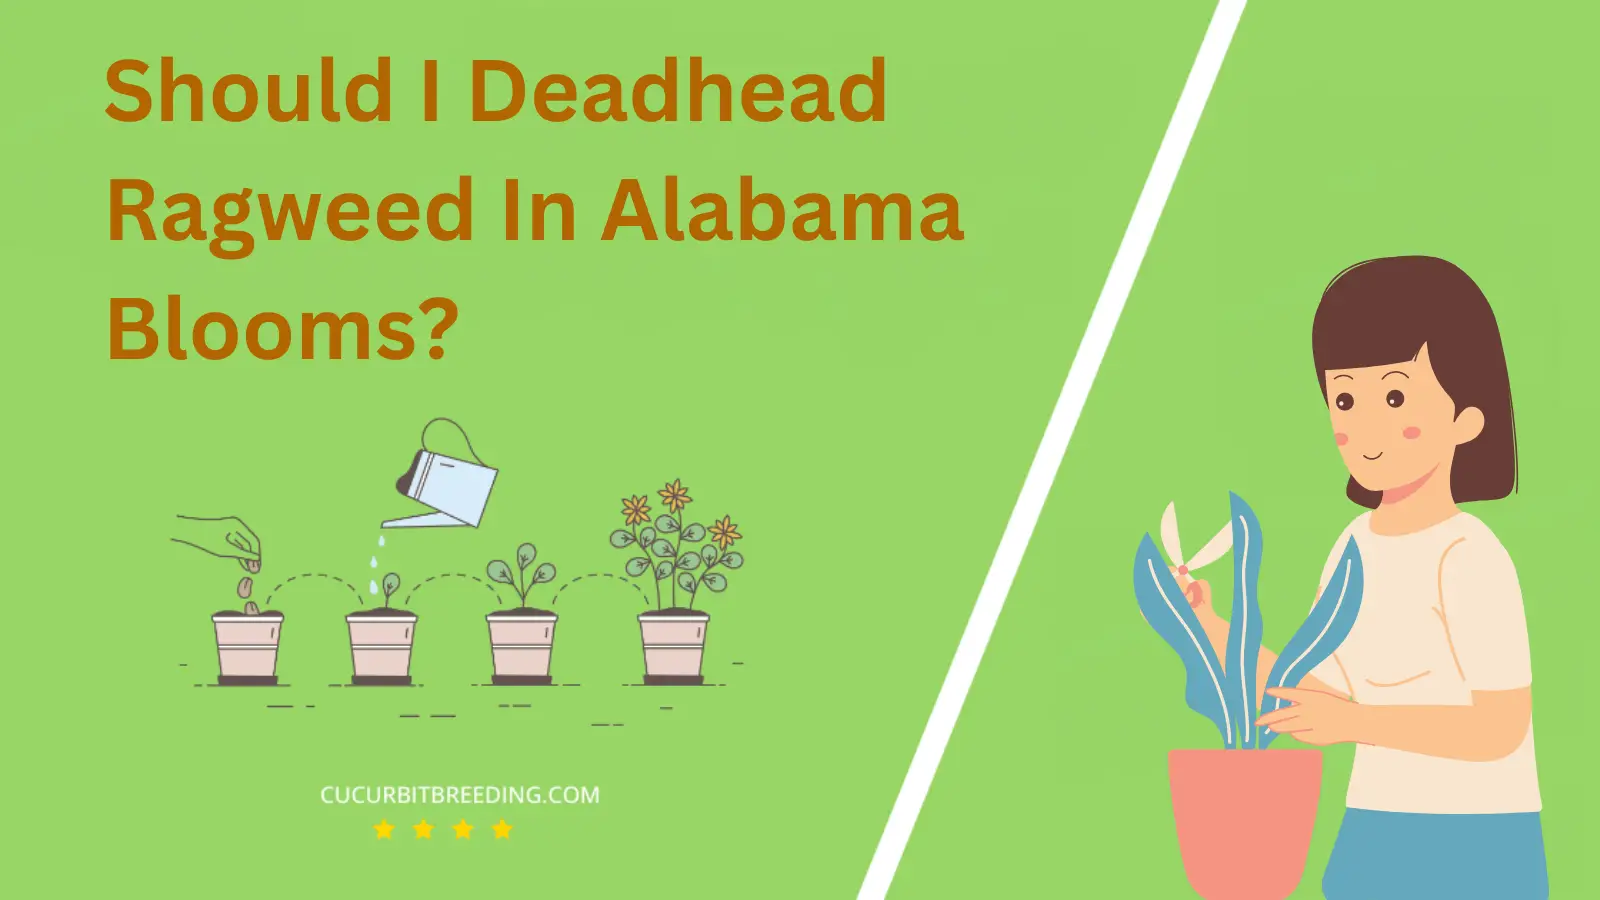 Should I Deadhead Ragweed In Alabama Blooms?